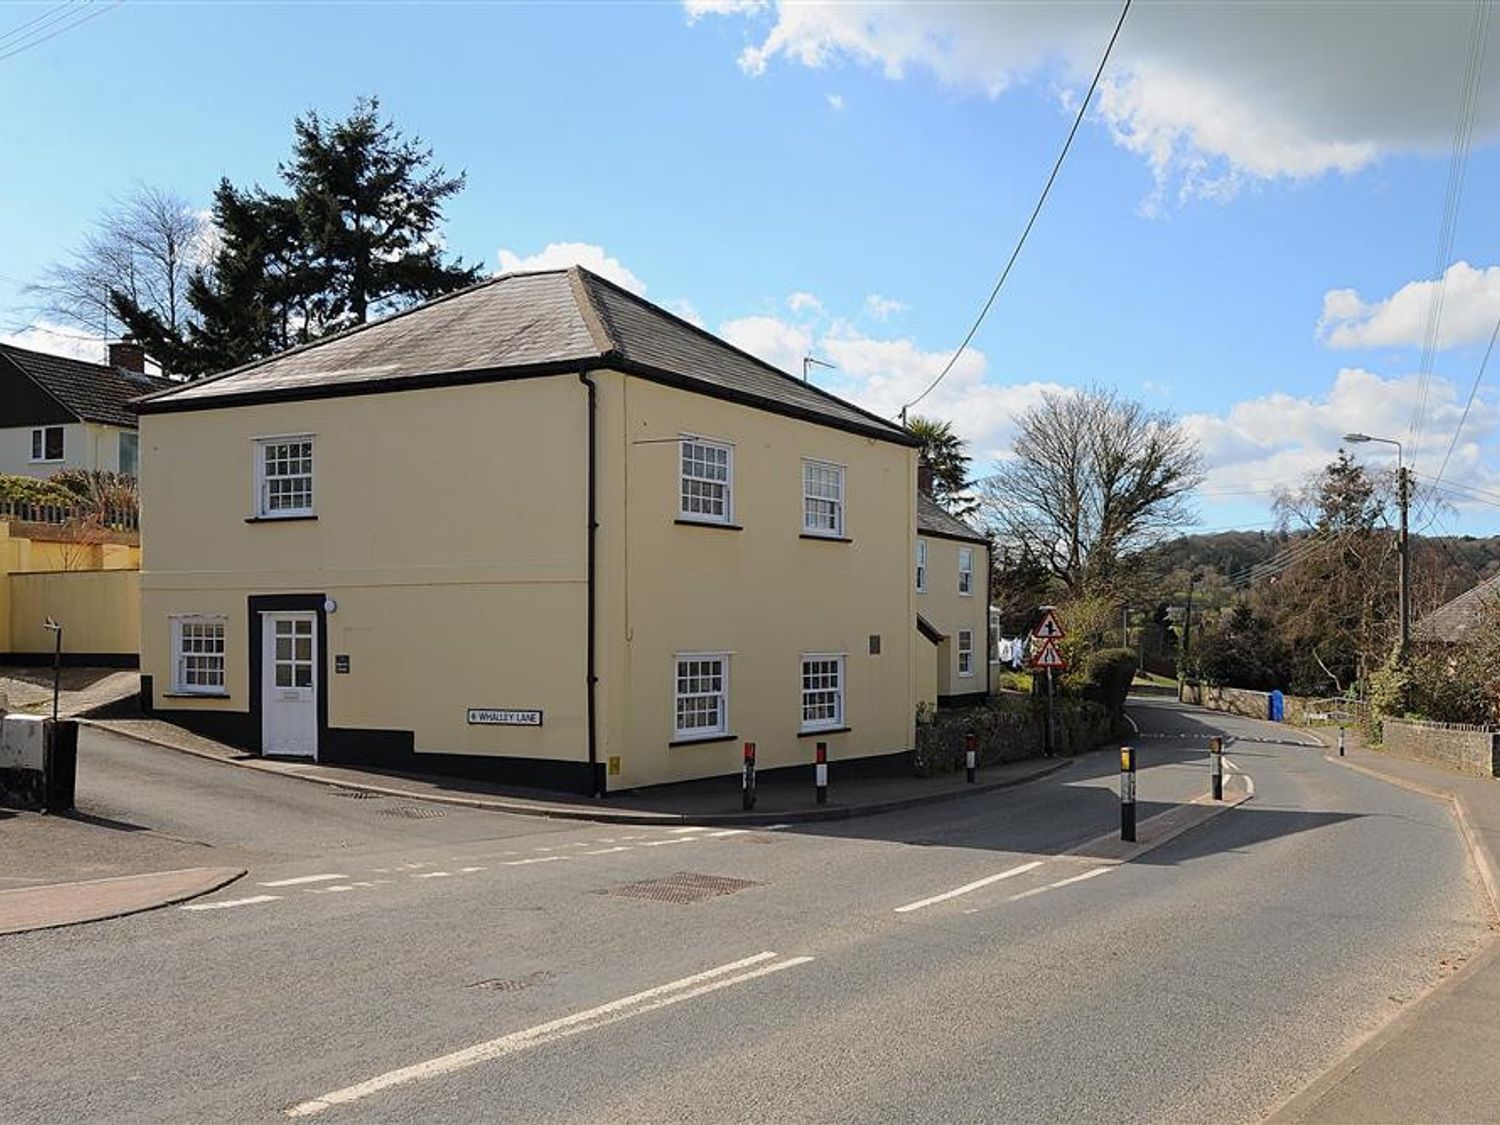 1 New Inn Corner - Dorset - 1106292 - photo 1